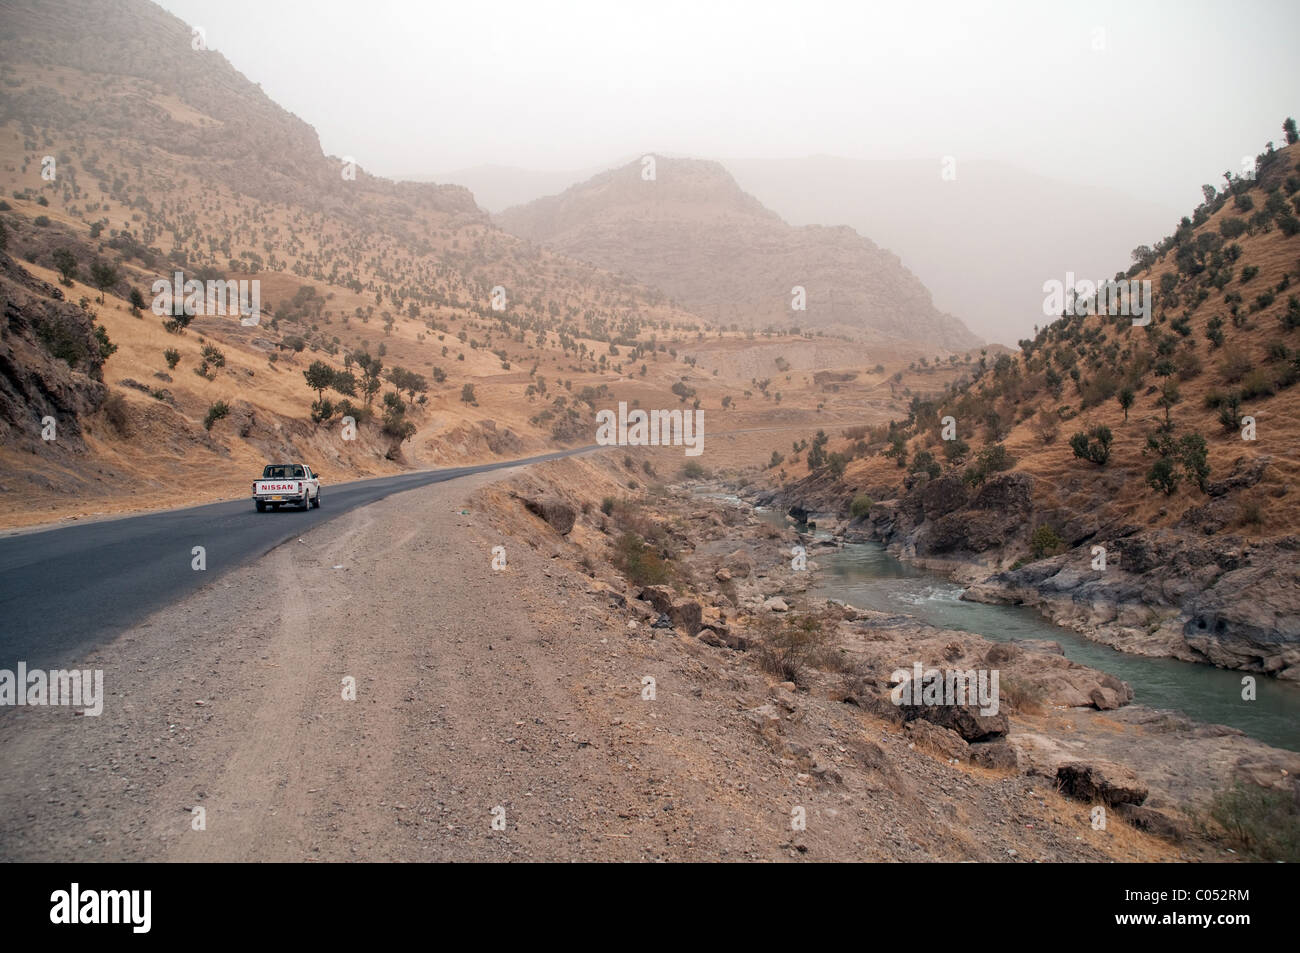 The Haji Omran Road, a highway running beside the Choman River and through the Zagros Mountains of Iraqi Kurdistan region of northern Iraq, Stock Photo